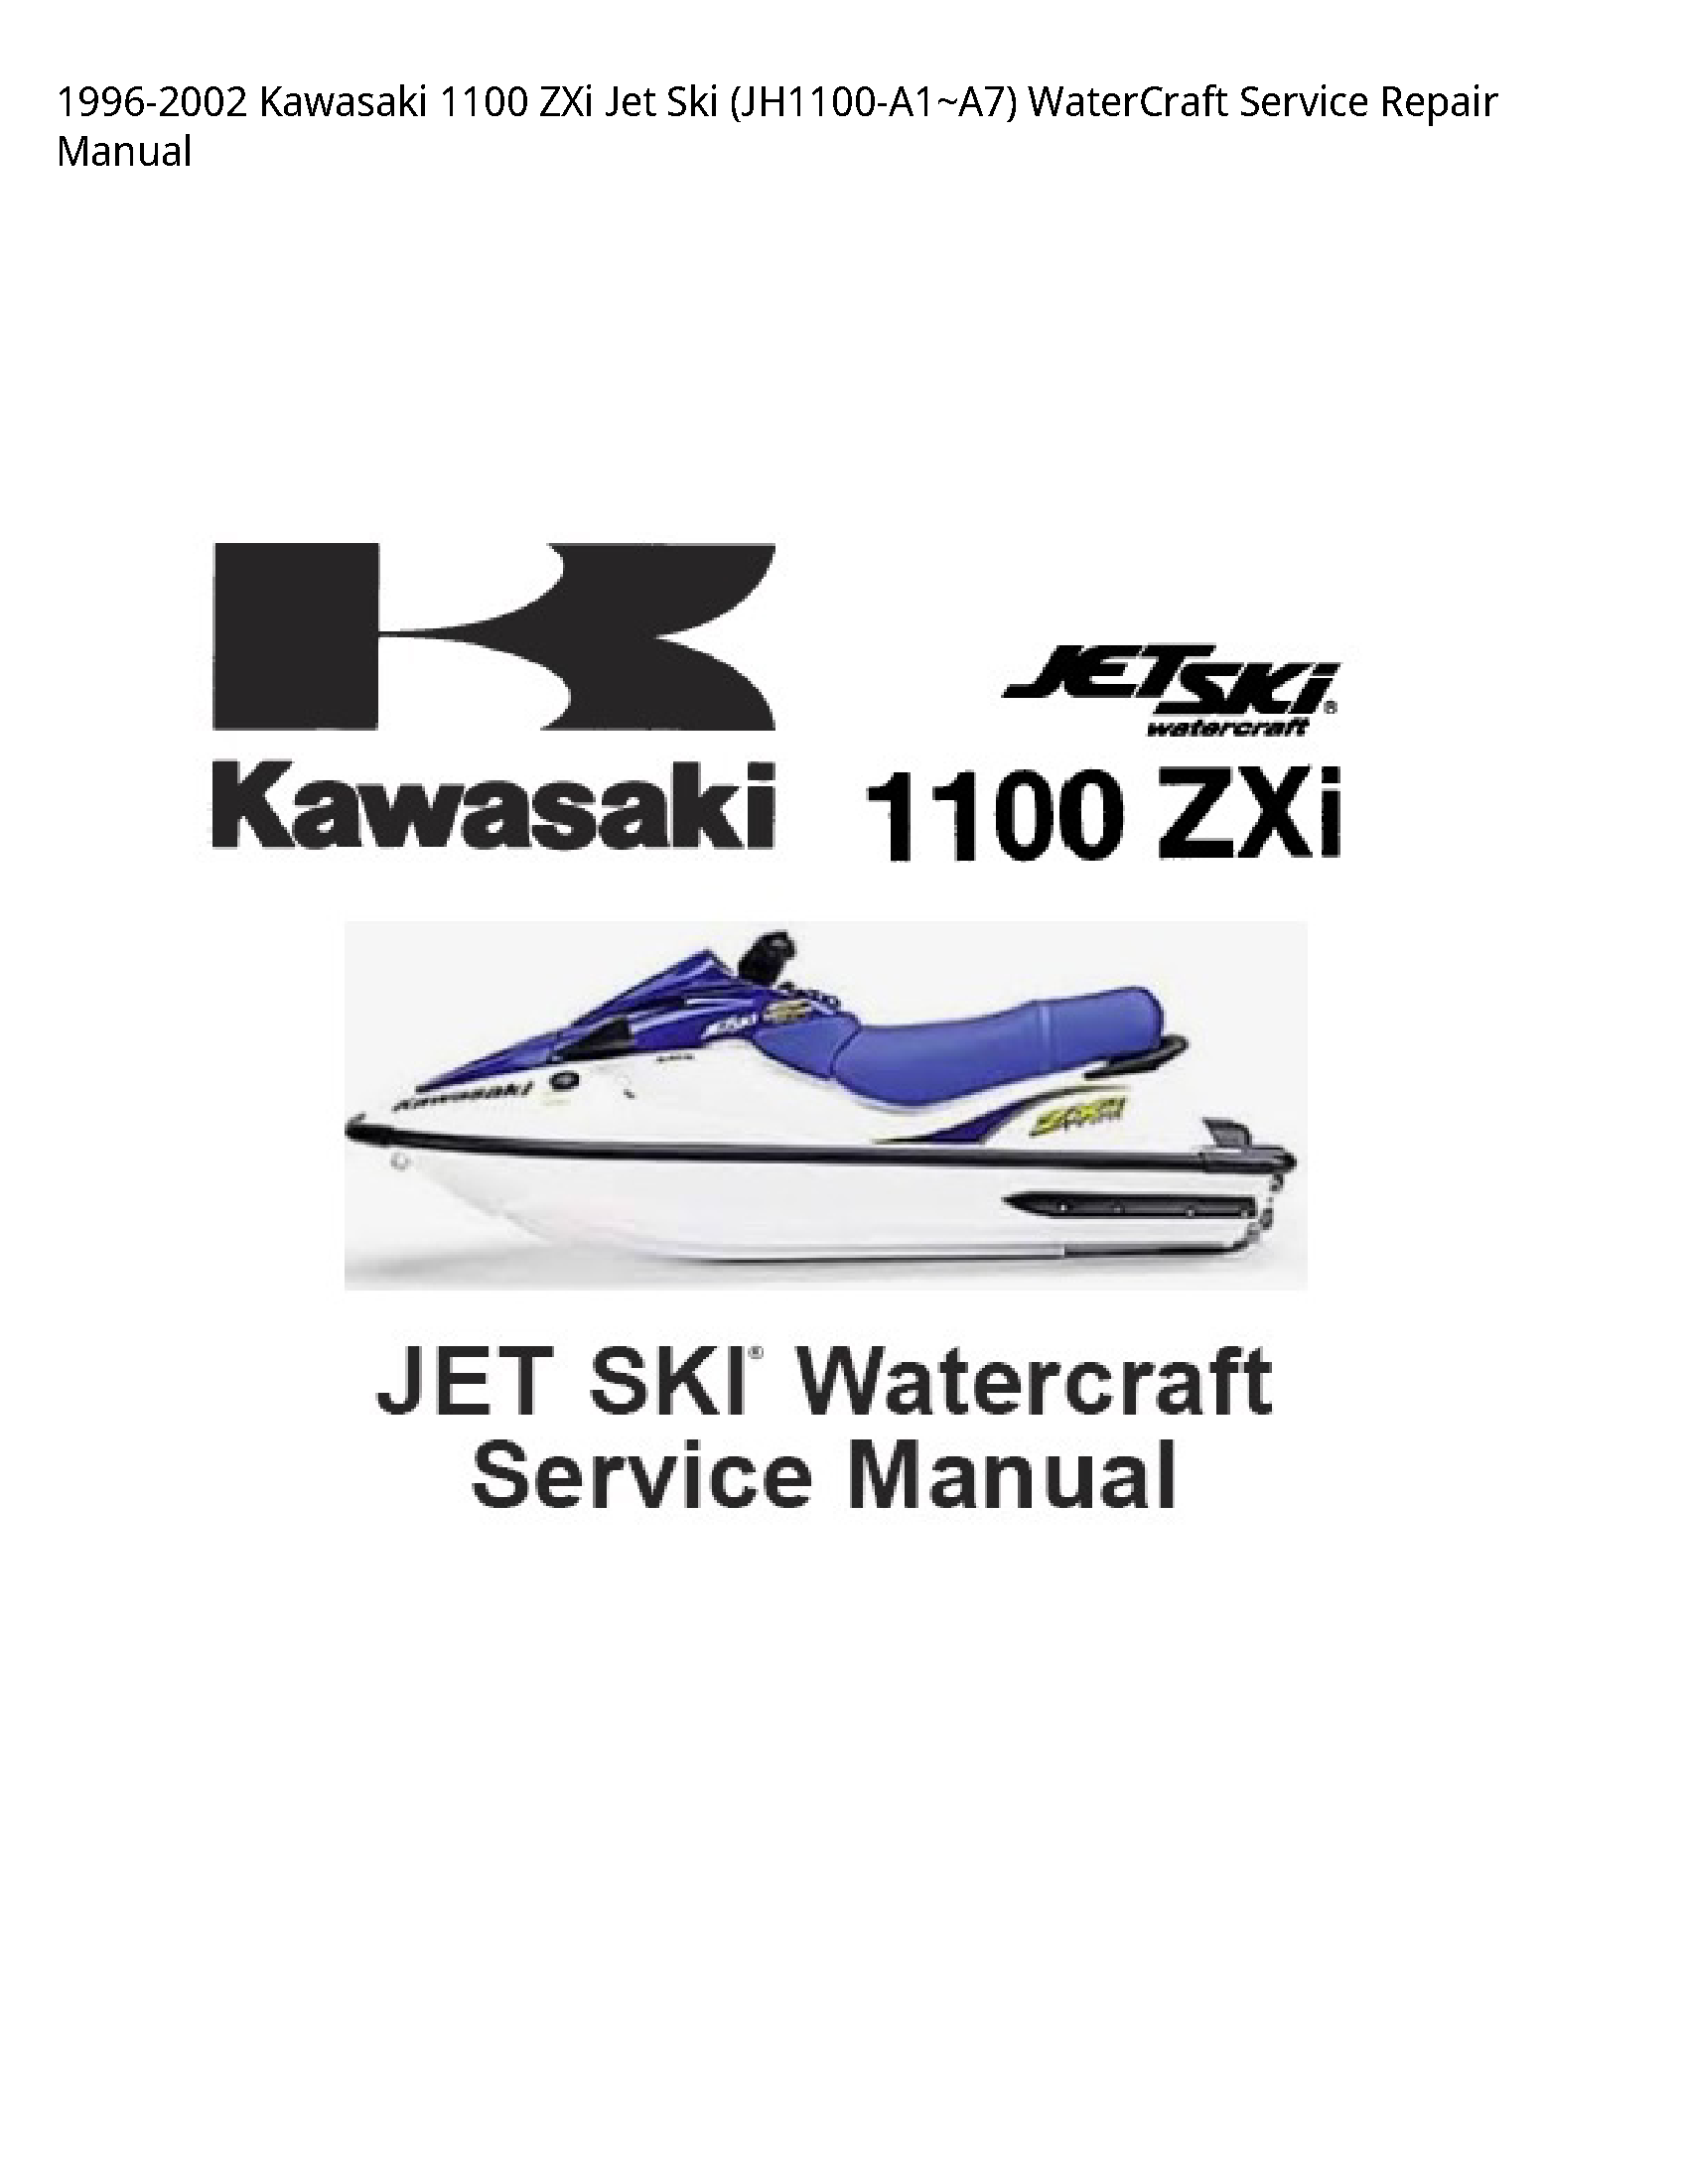 Kawasaki 1100 ZXi Jet Ski WaterCraft manual